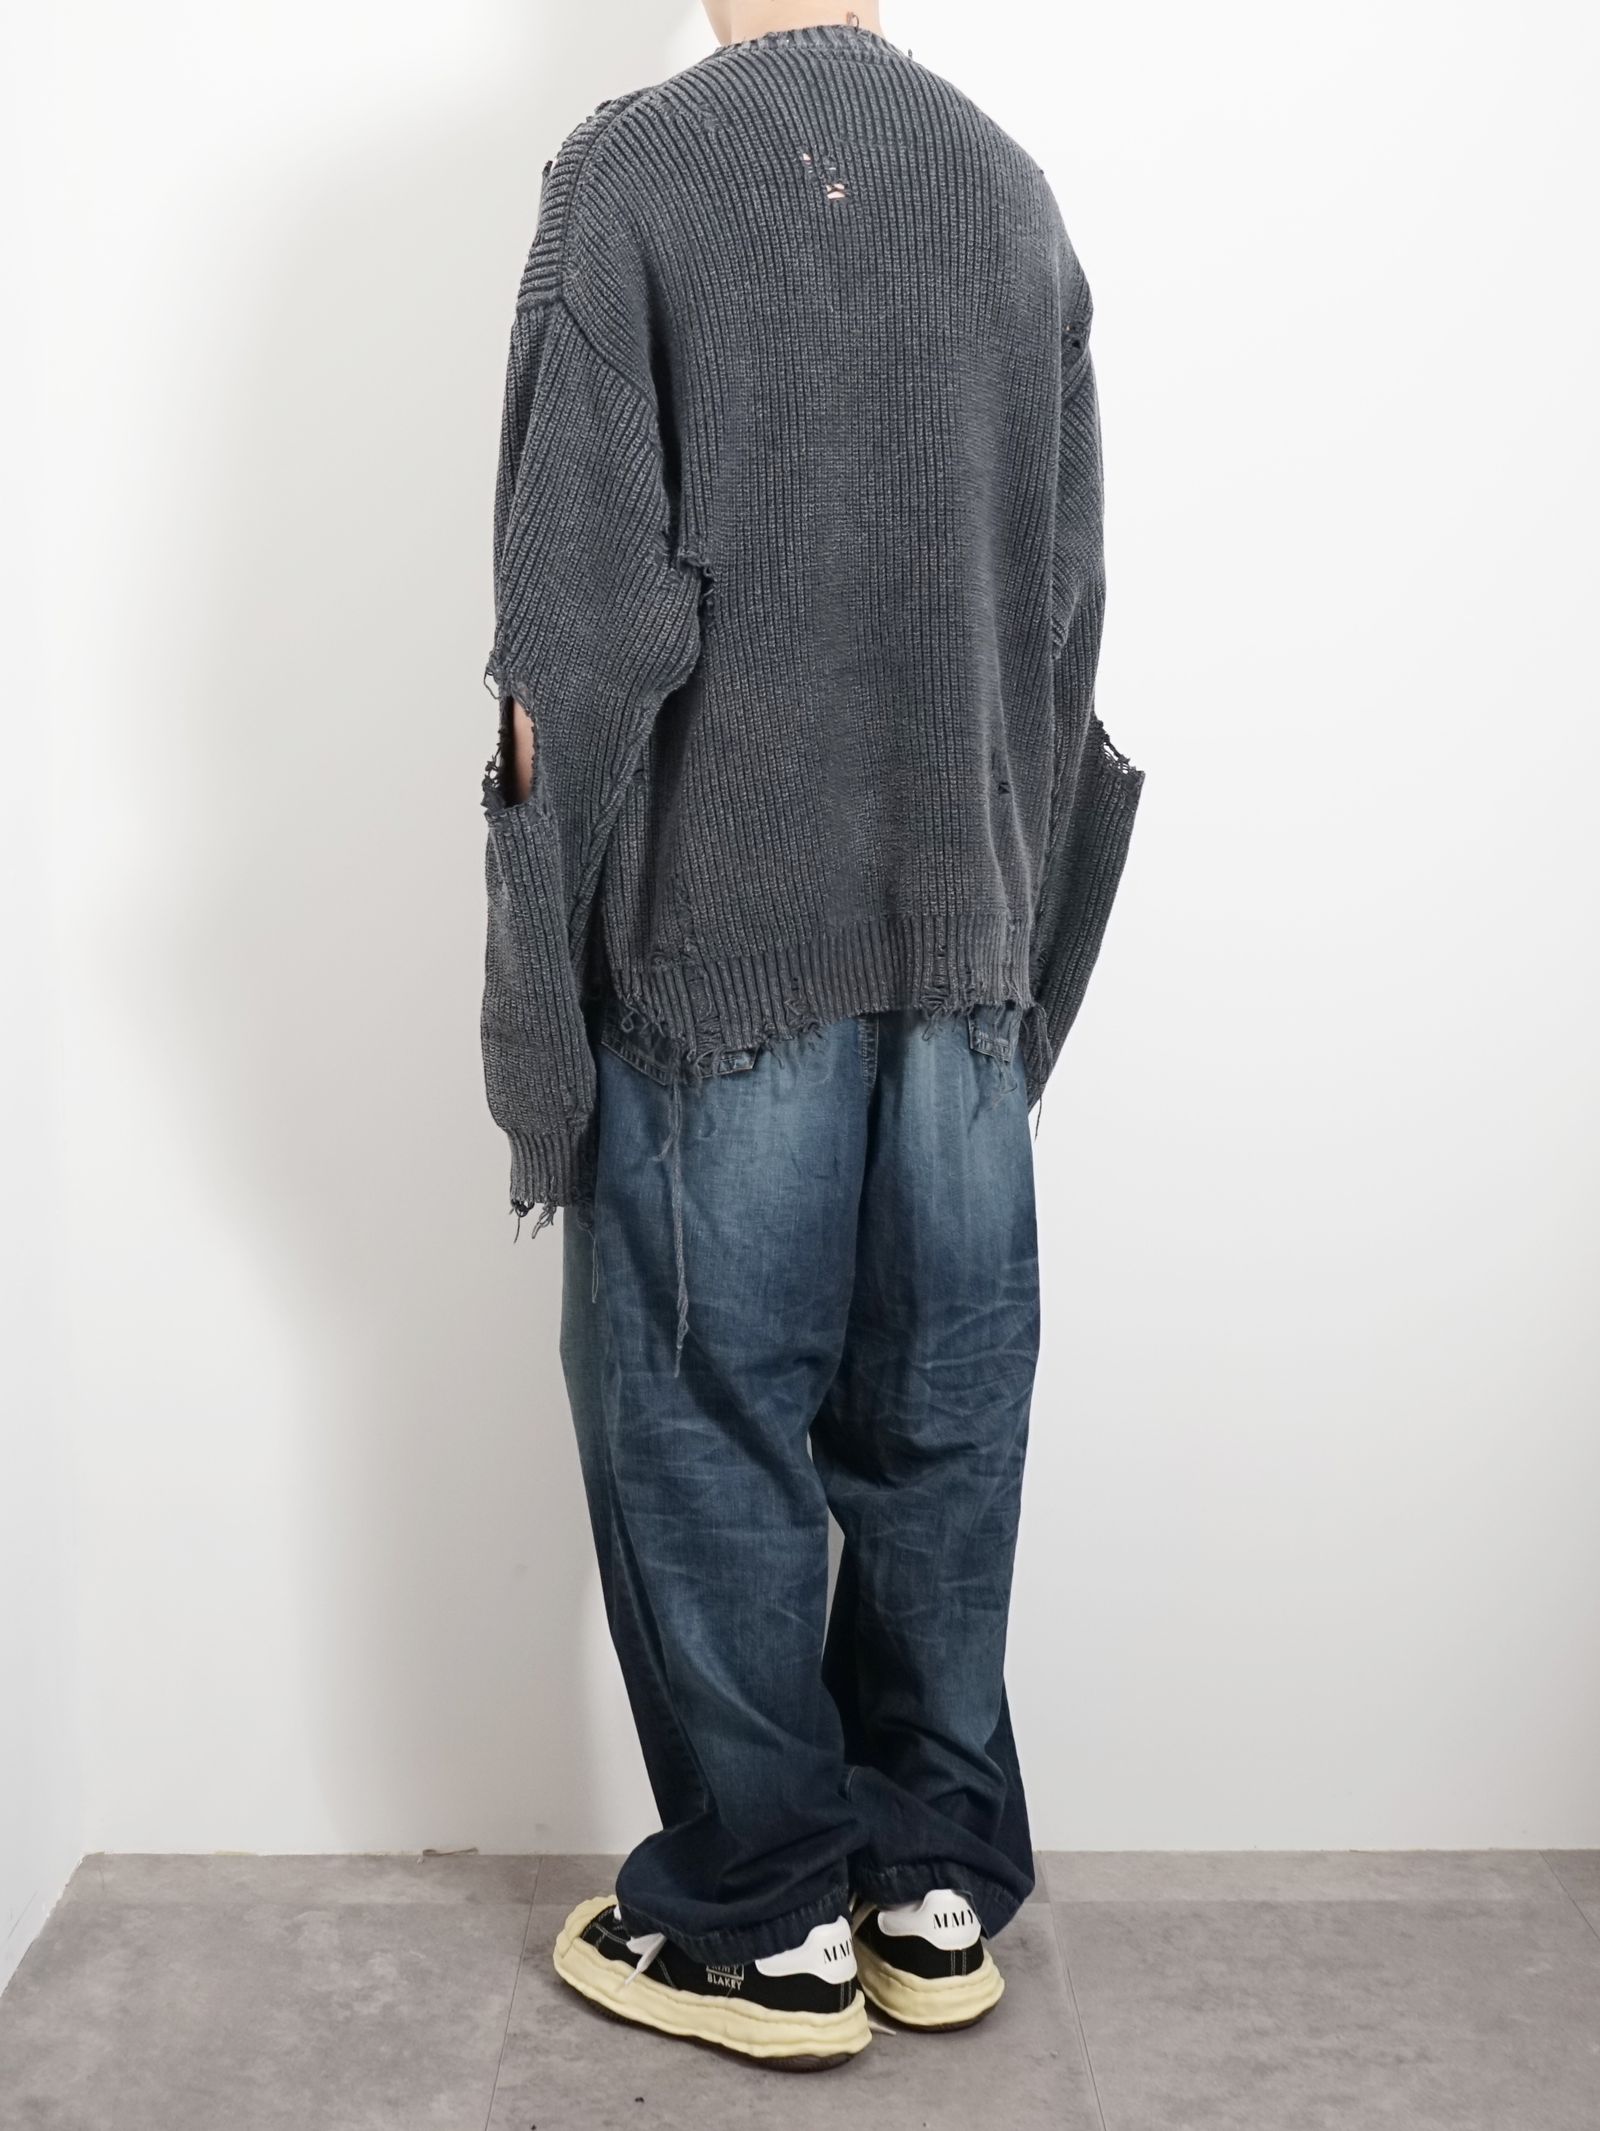 Maison MIHARA YASUHIRO - ブリーチドニットセーター - Bleached Knit Sweater - BLACK |  ADDICT WEB SHOP